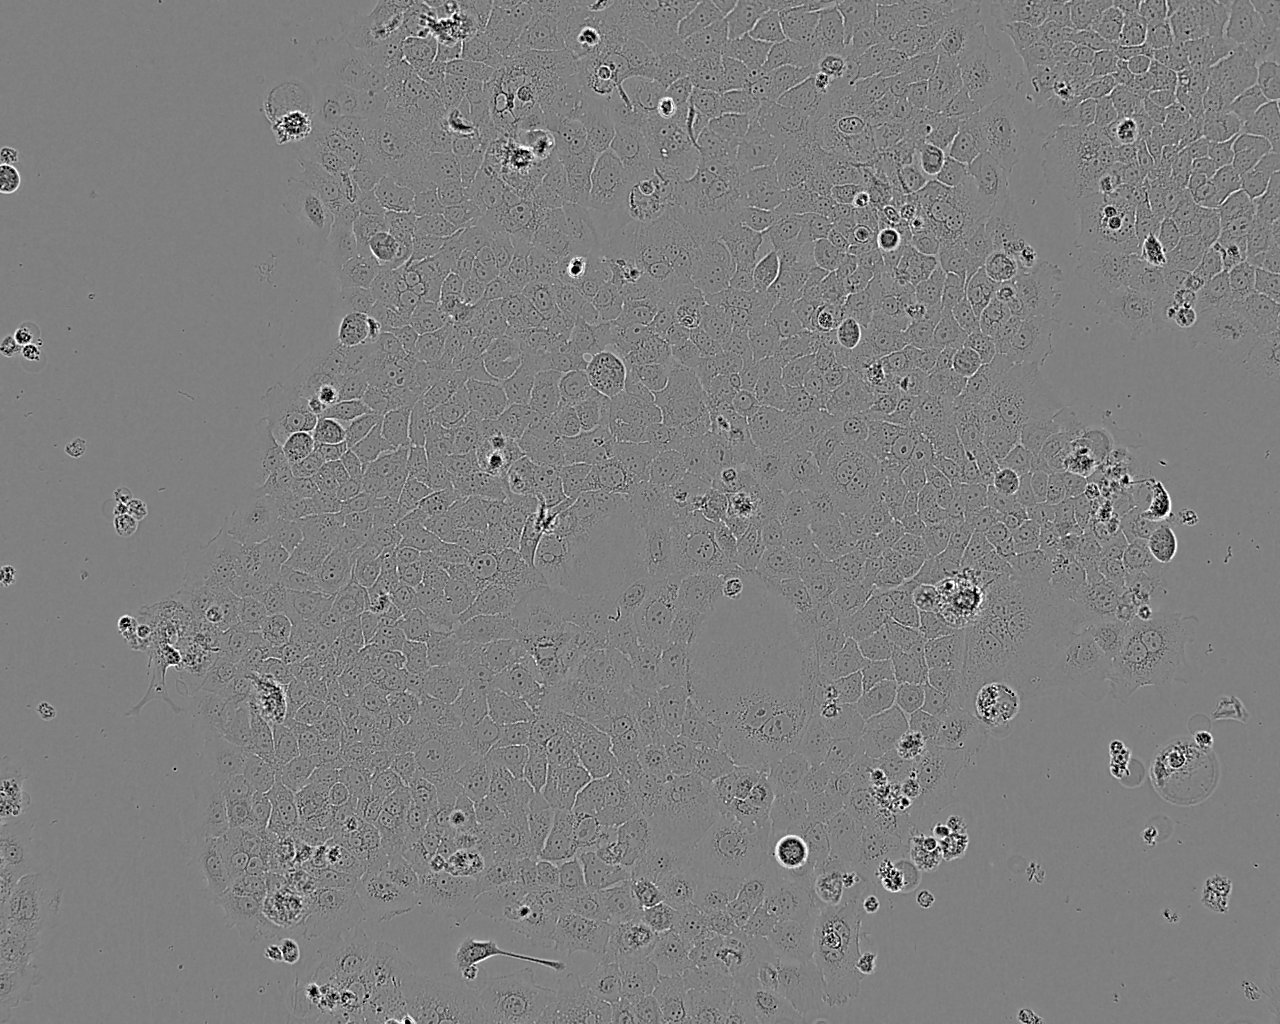 TE-8 Cells|人食管癌细胞系